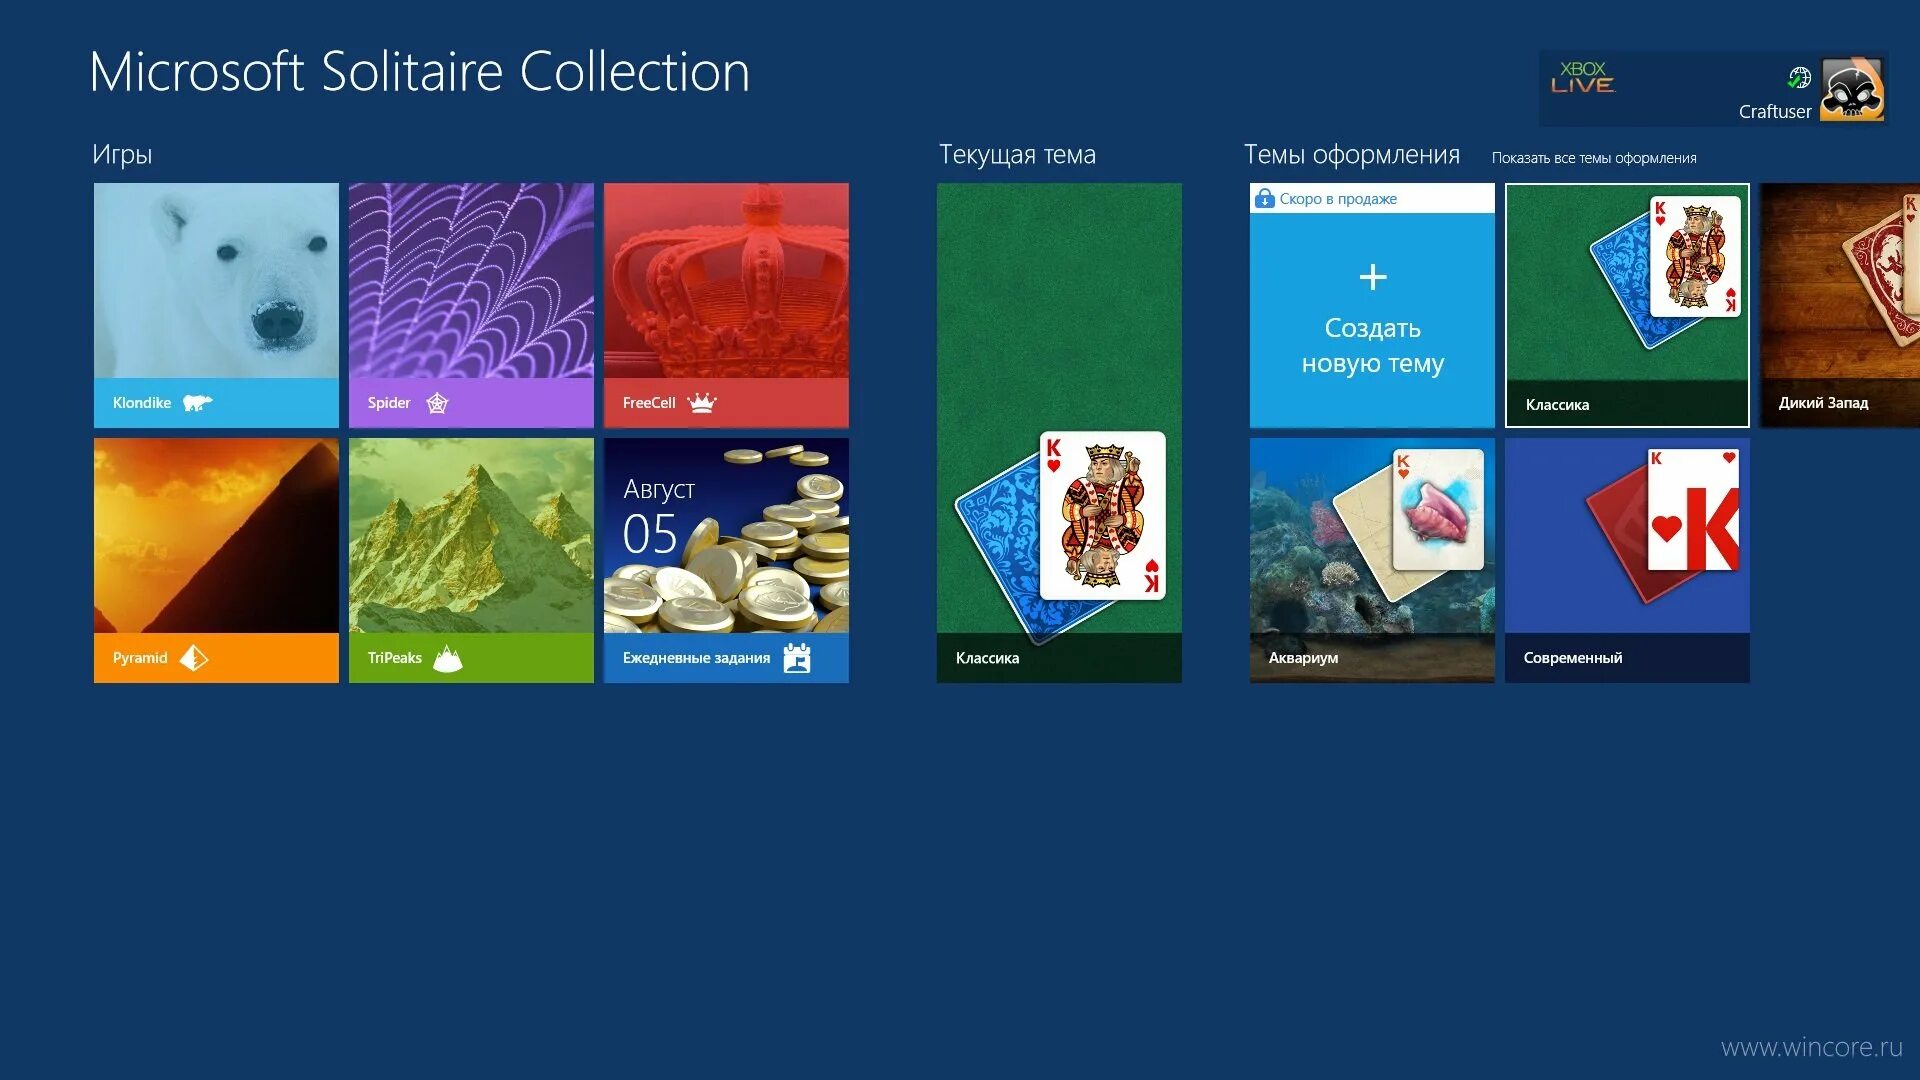 Игры Microsoft Solitaire collection. Microsoft Solitaire collection Windows 8 "без магазина". Microsoft Солитер коллекция. Солитер коллекшн.